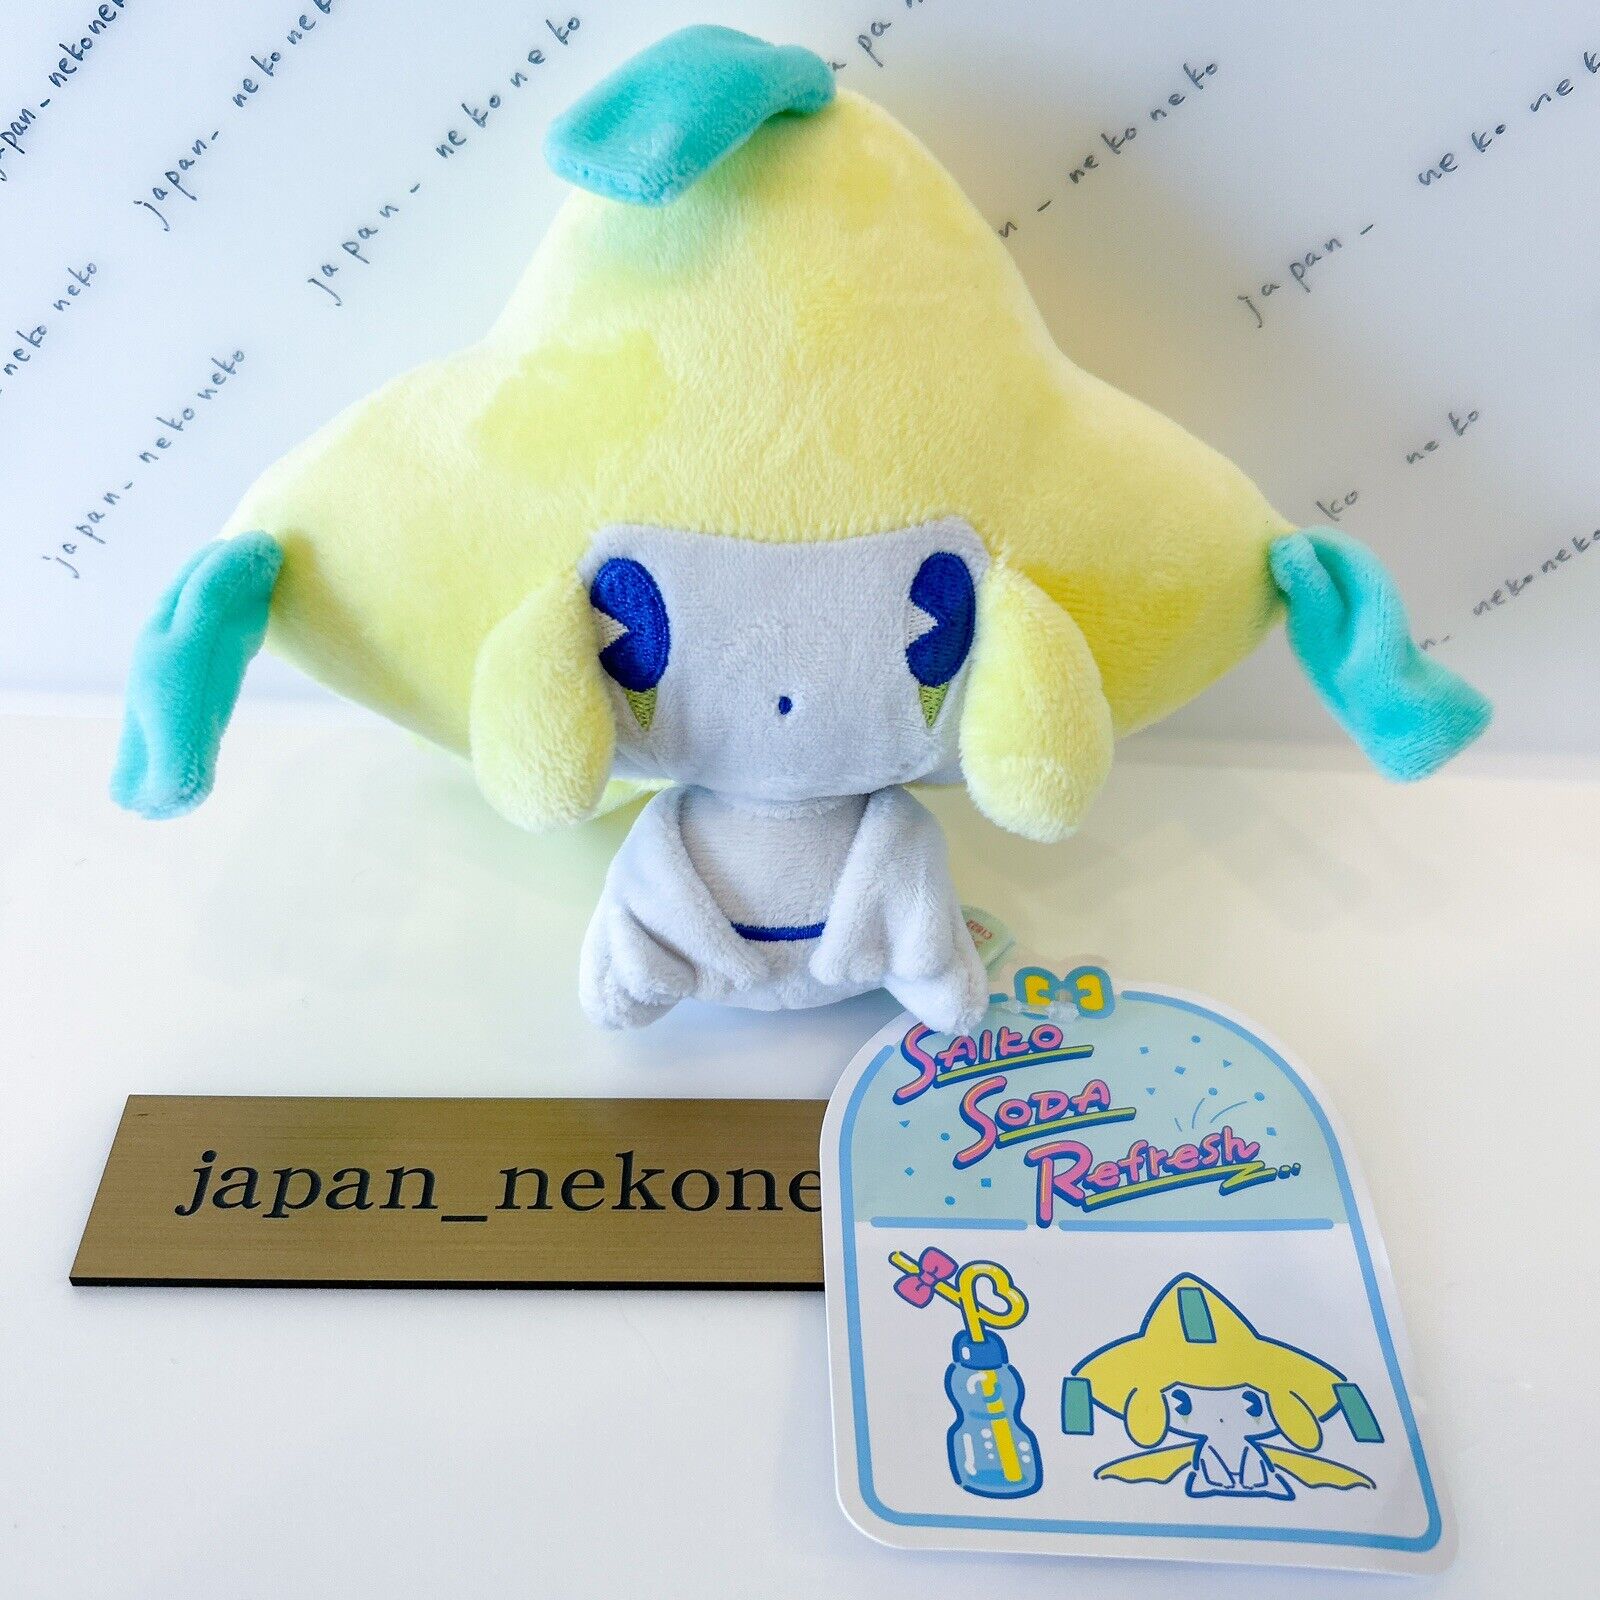 Saiko Soda Refresh Jirachi Plush doll Pokemon Center Limited